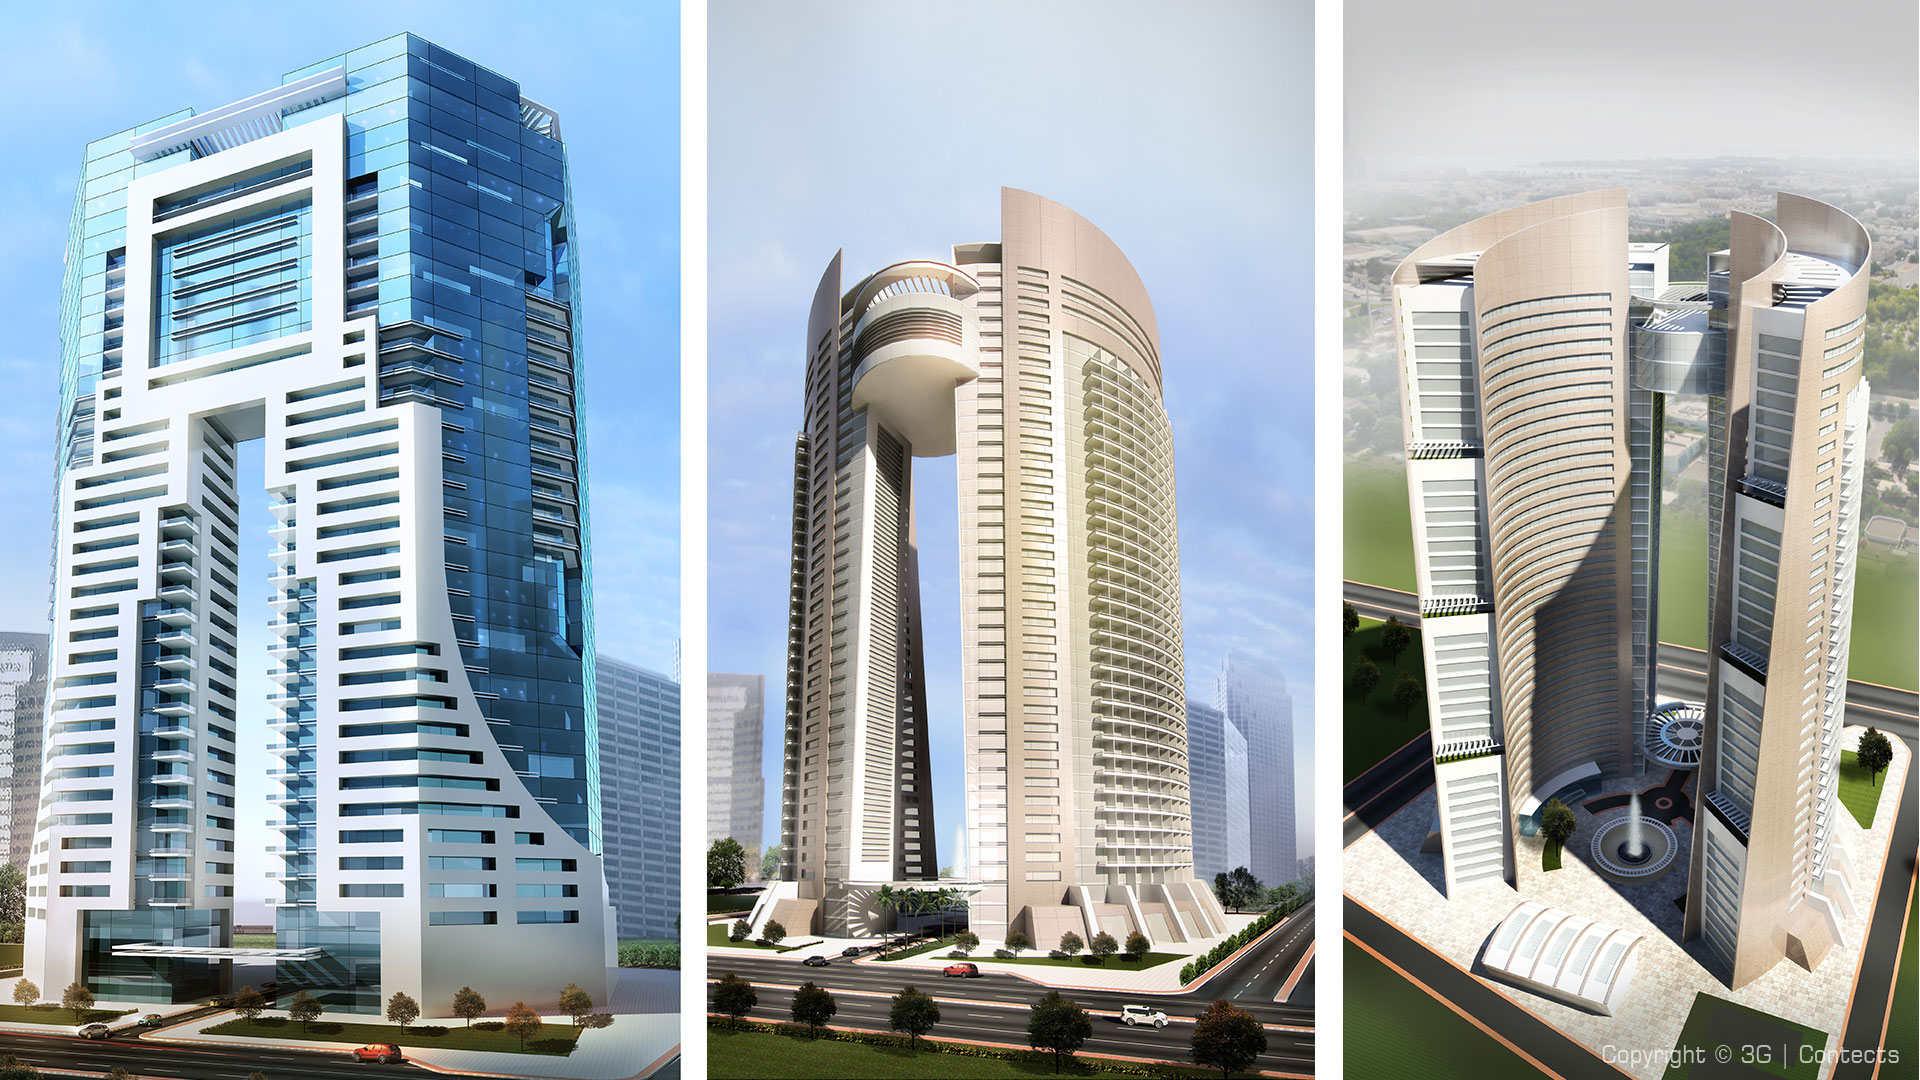  Al Bayt Real Estate Development